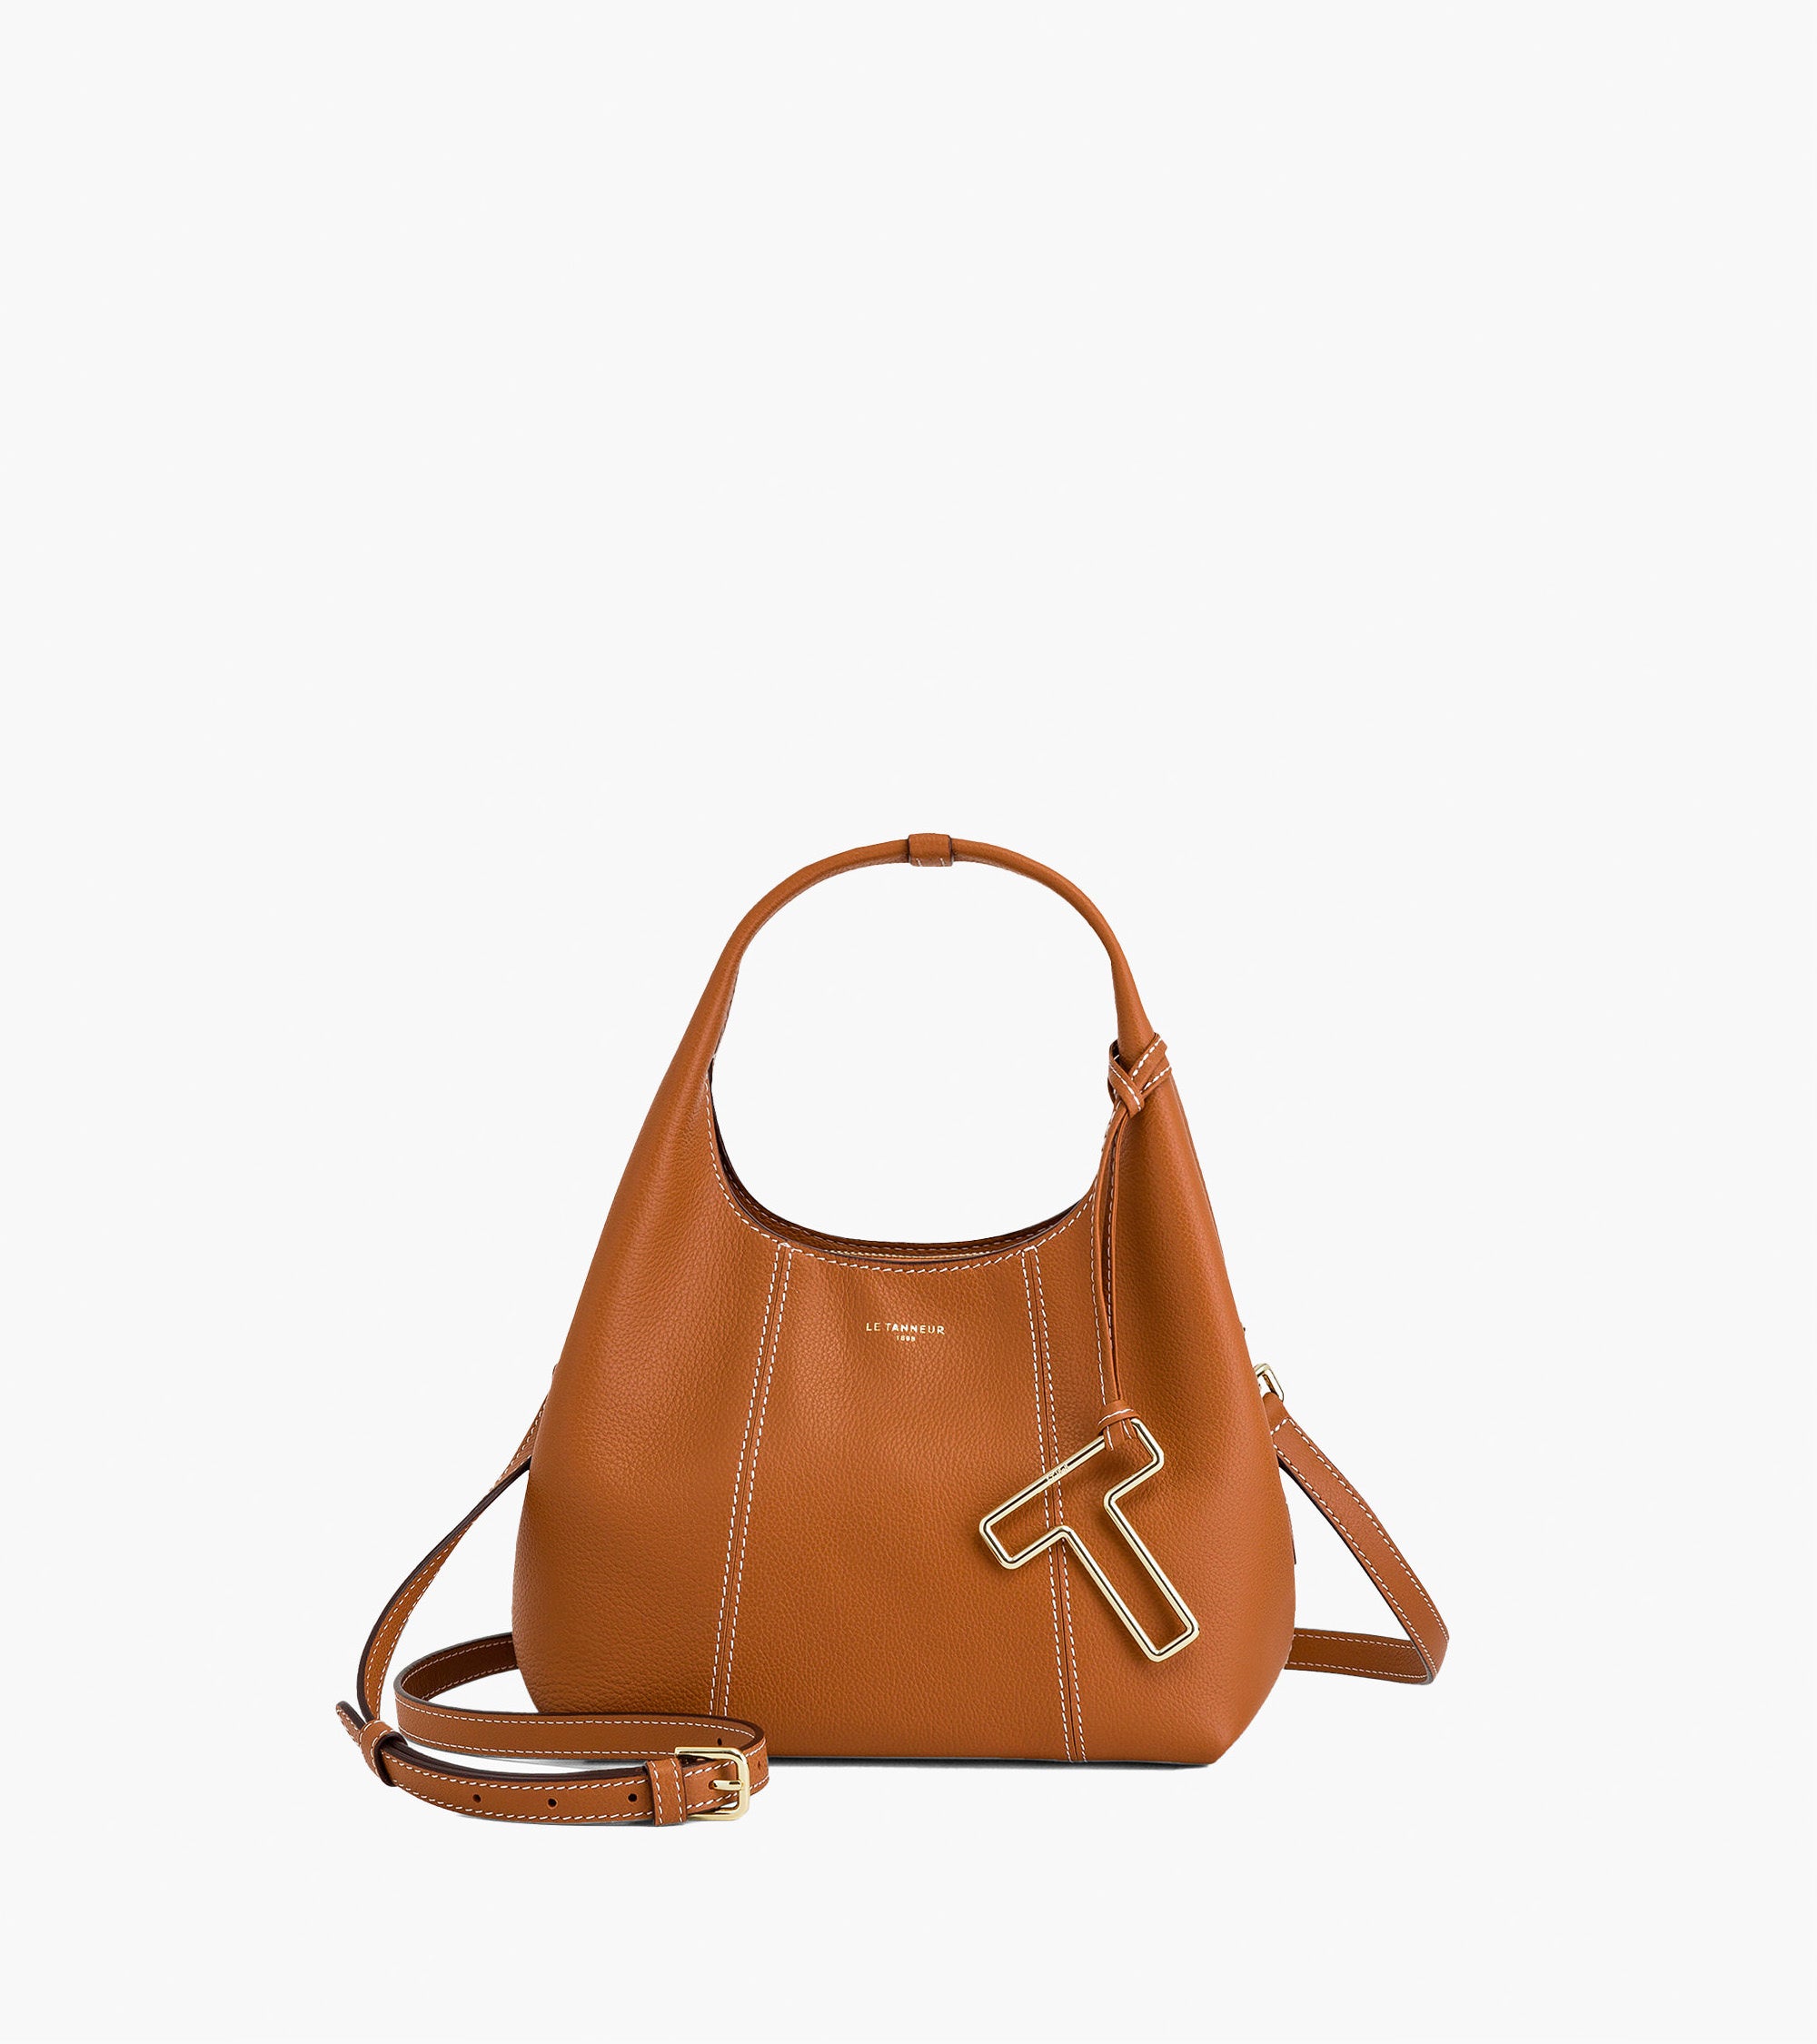 Juliette small handbag in grained leather